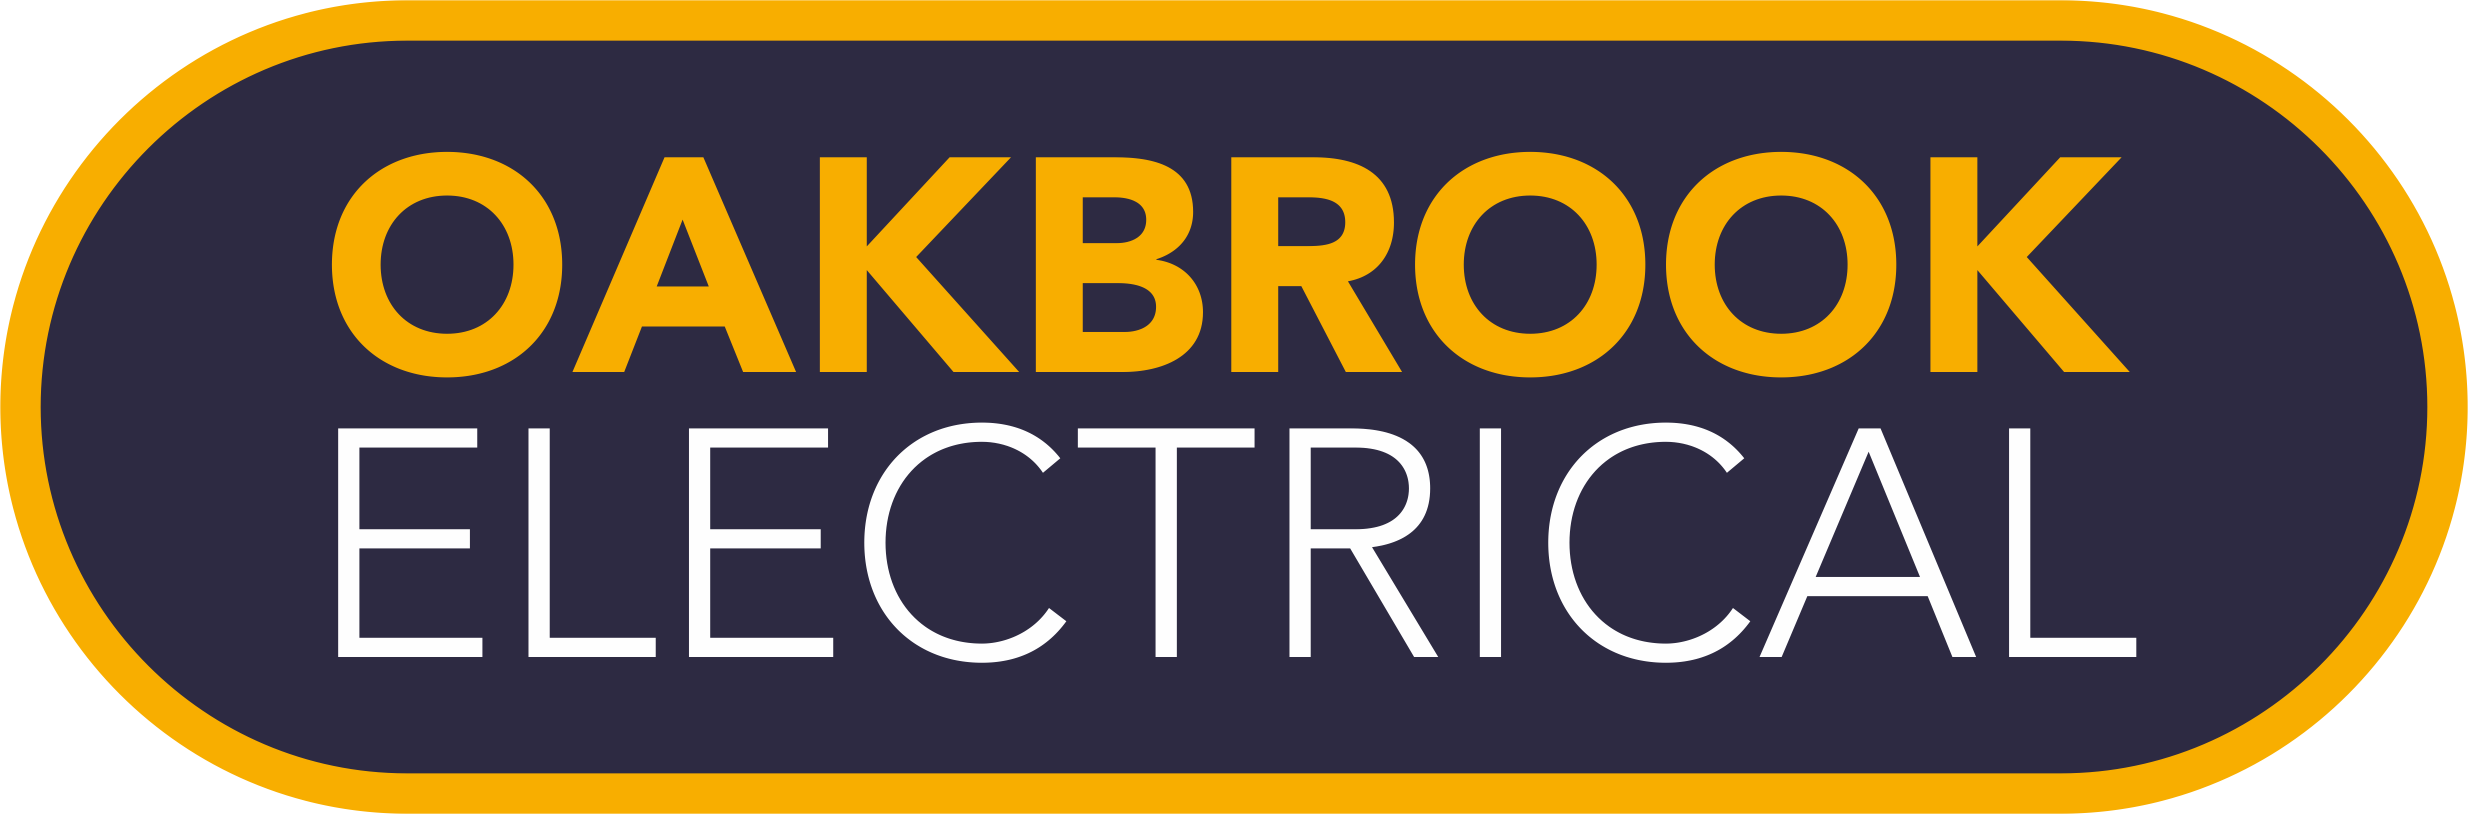 Oakbrook Electrical